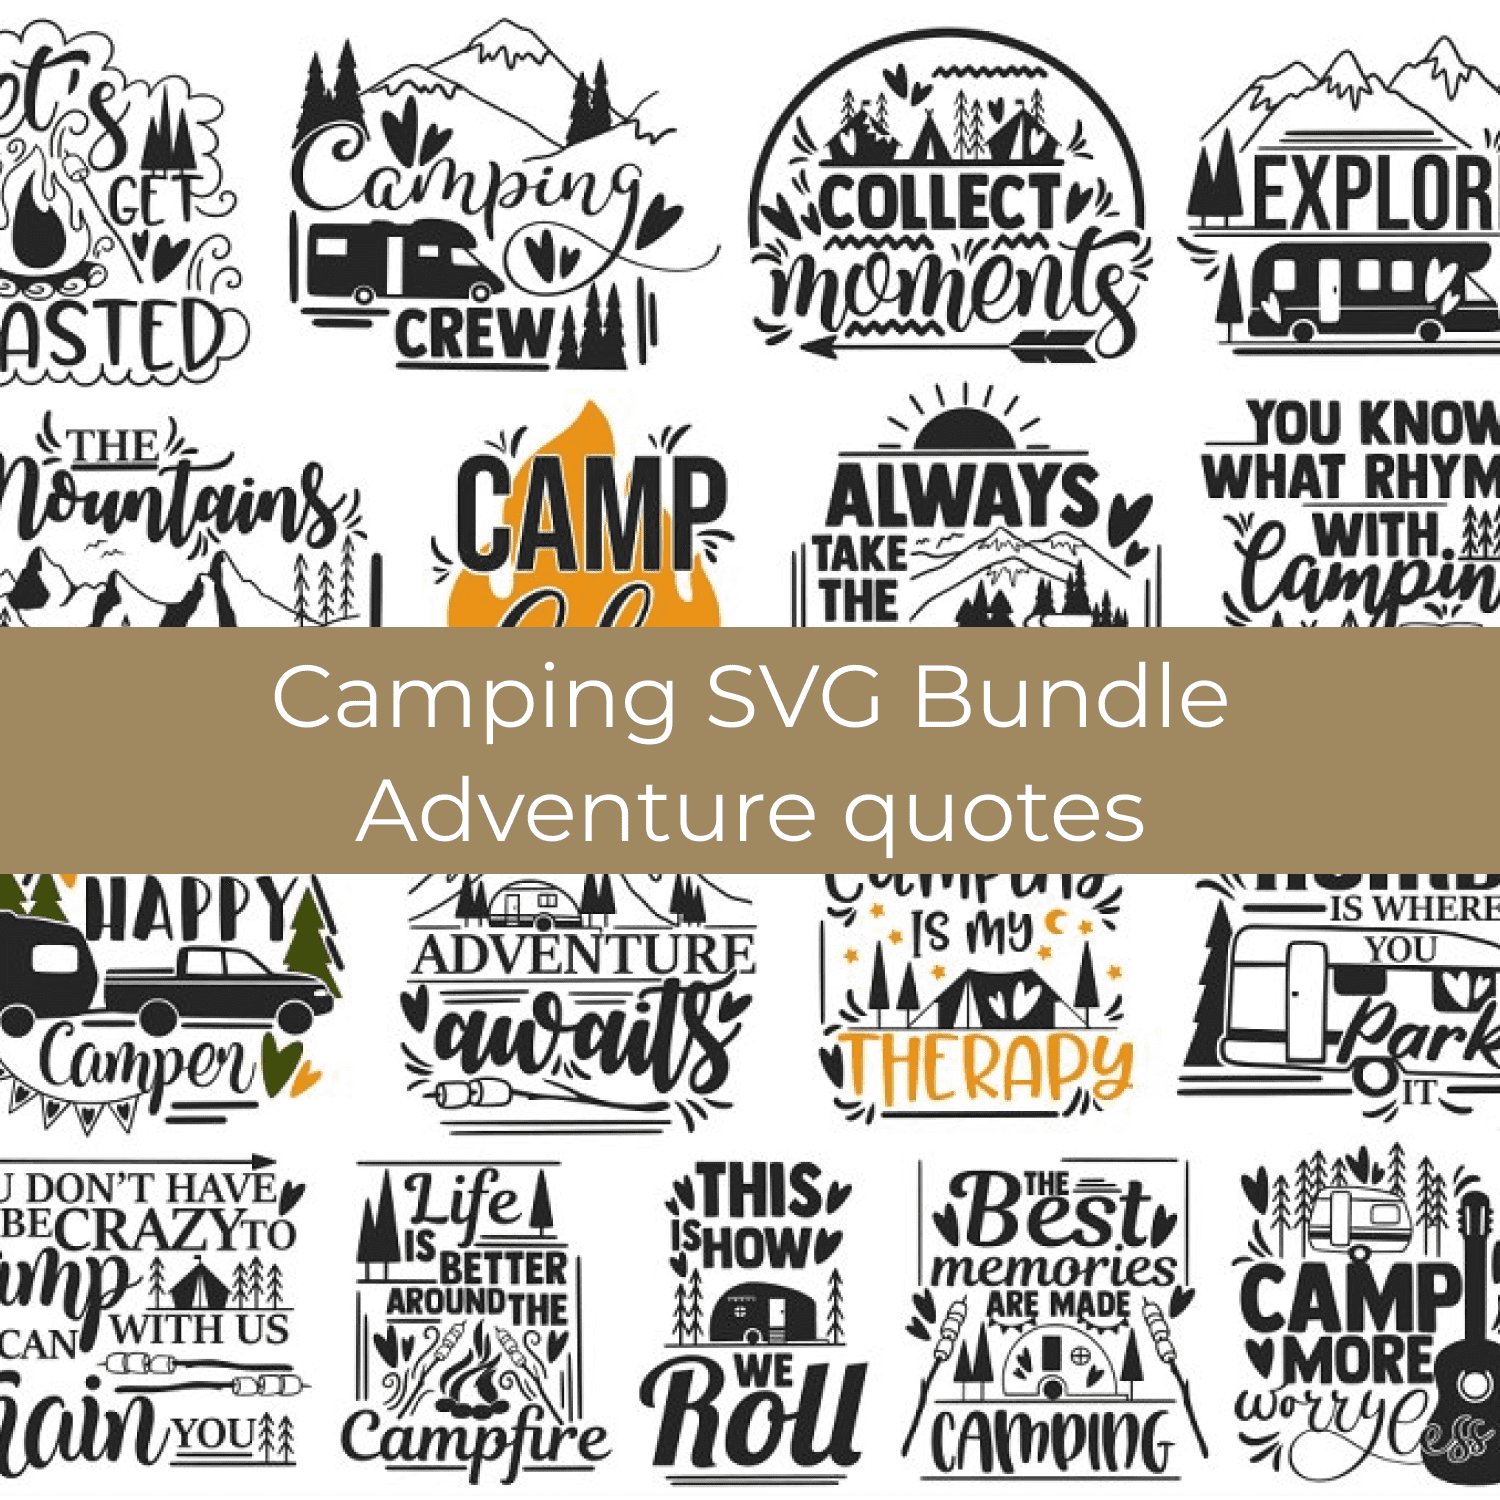 Camping SVG Bundle Adventure quotes.